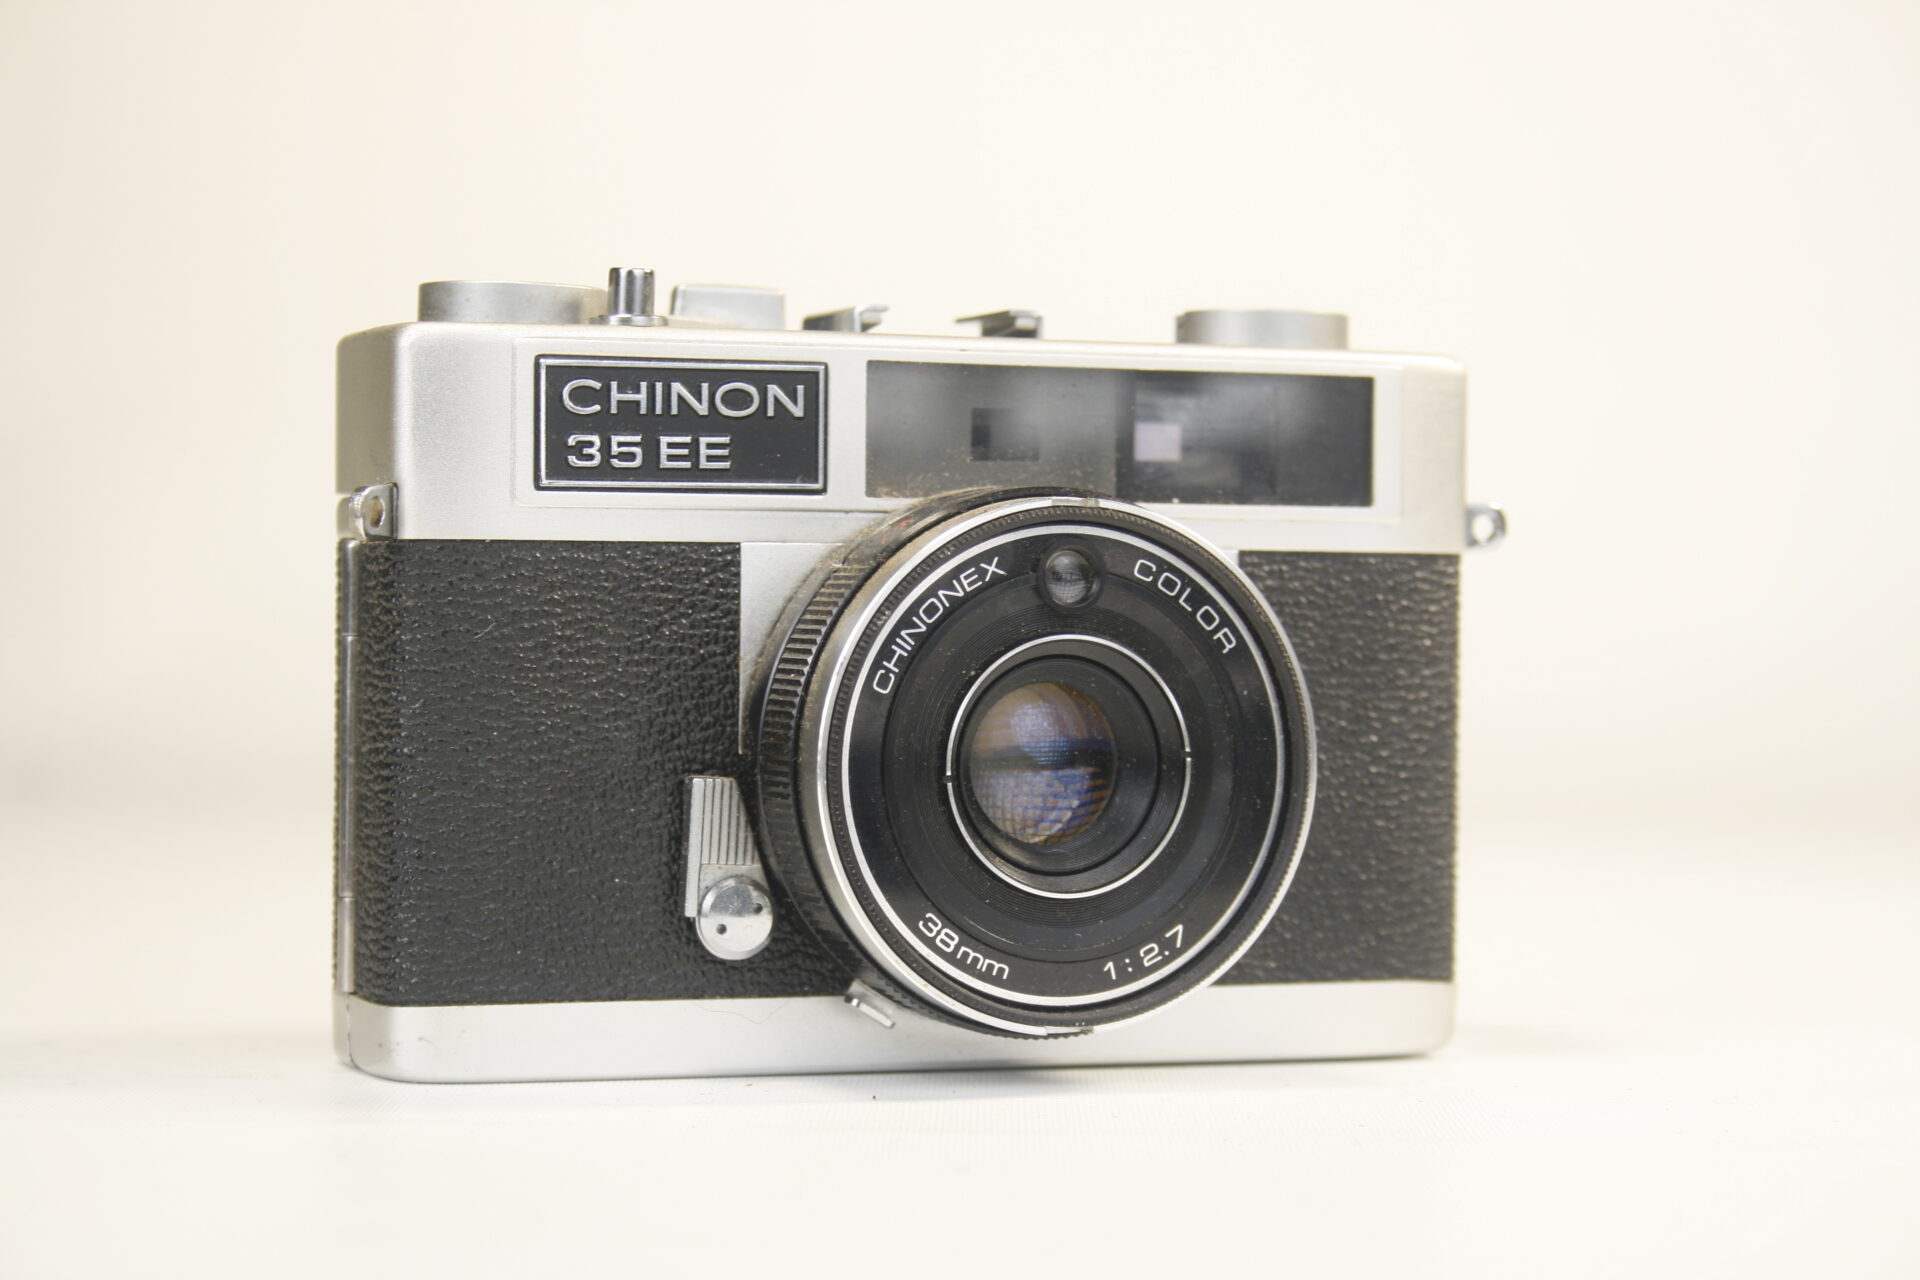 Chinon 35 EE. 35mm compact rangefinder camera. Ca. 1976. Japan.